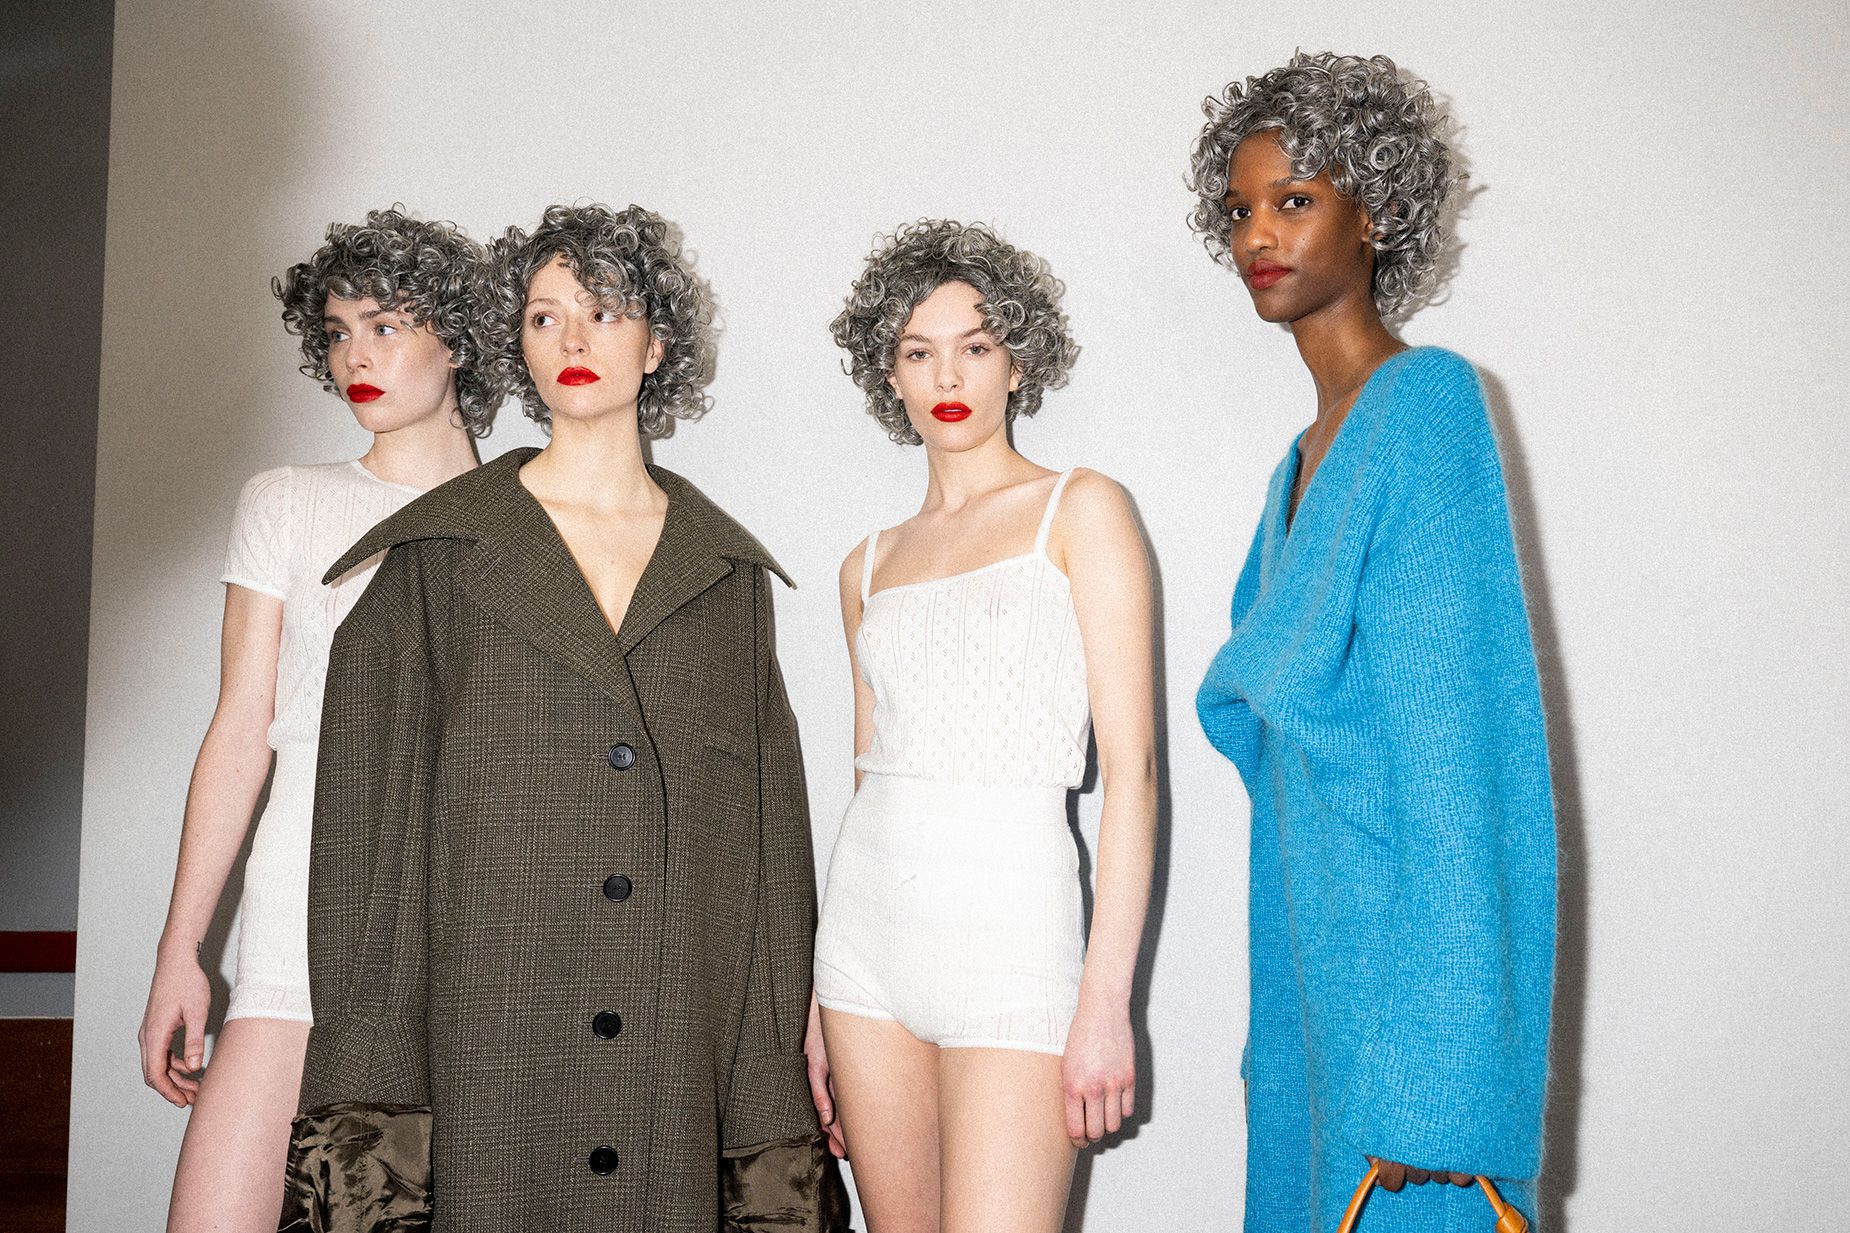 London Fashion Week: The Lowdown on the Catwalks